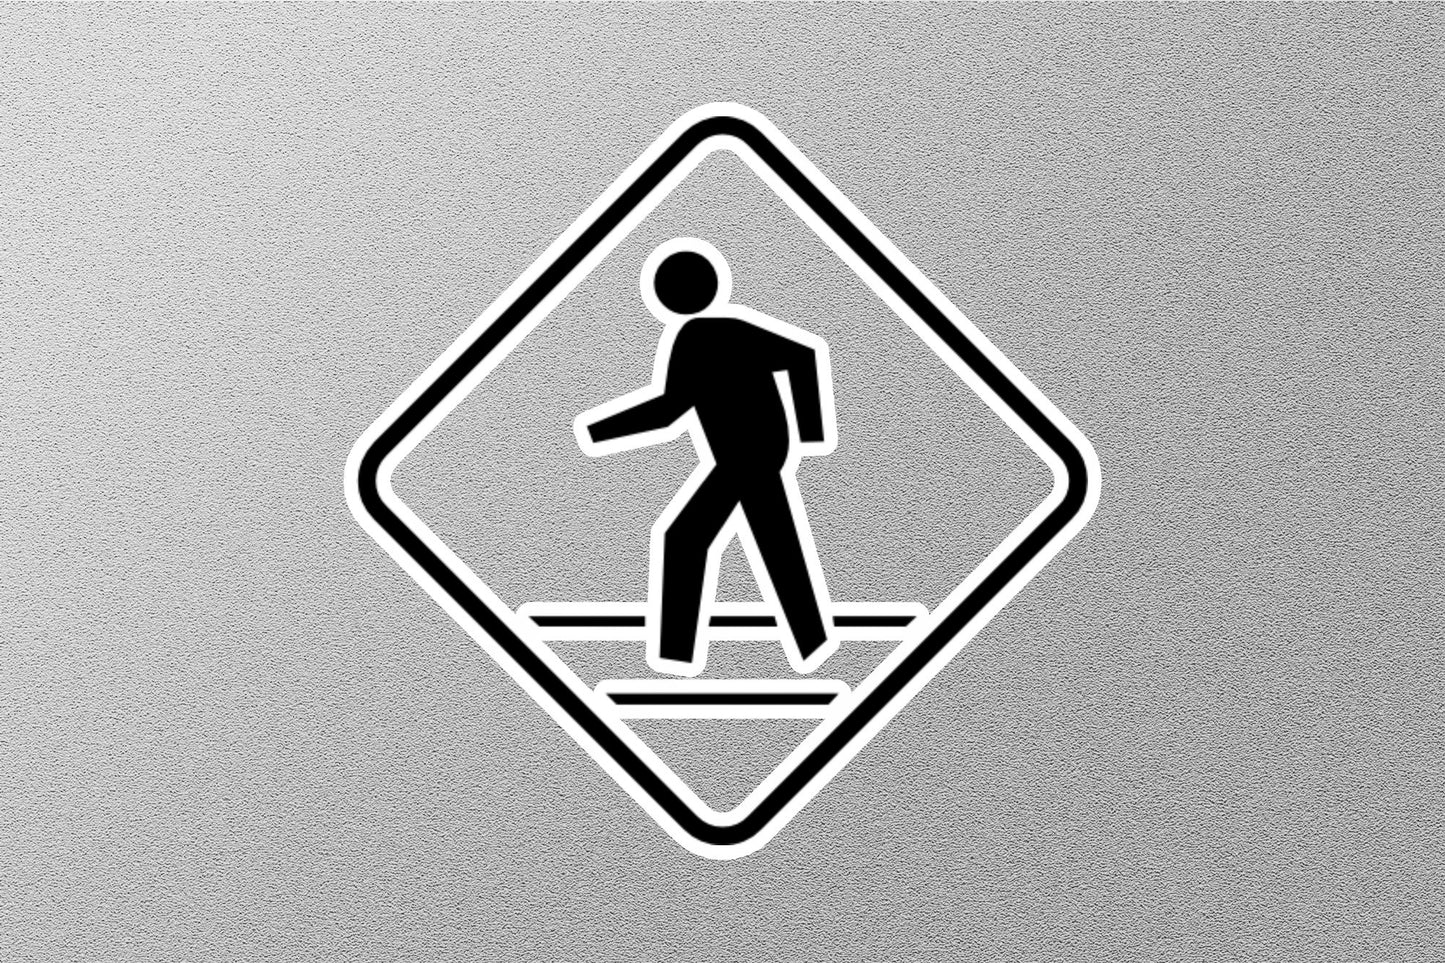 Pedestrian Crossing Sign Sticker